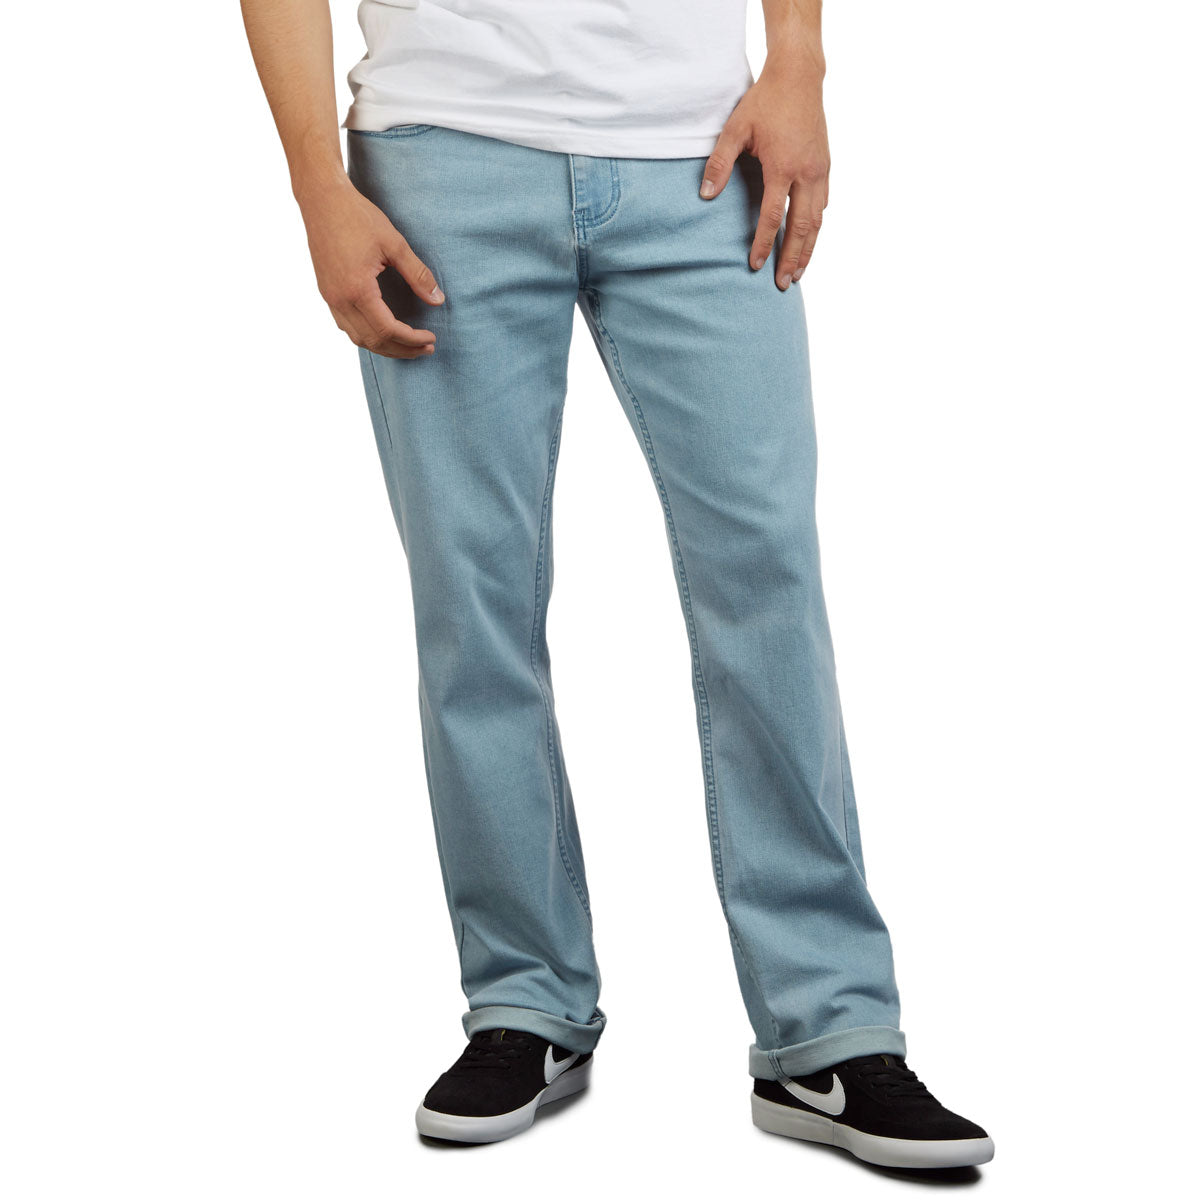 CCS Standard Plus Straight Denim Jeans - New Wash image 4